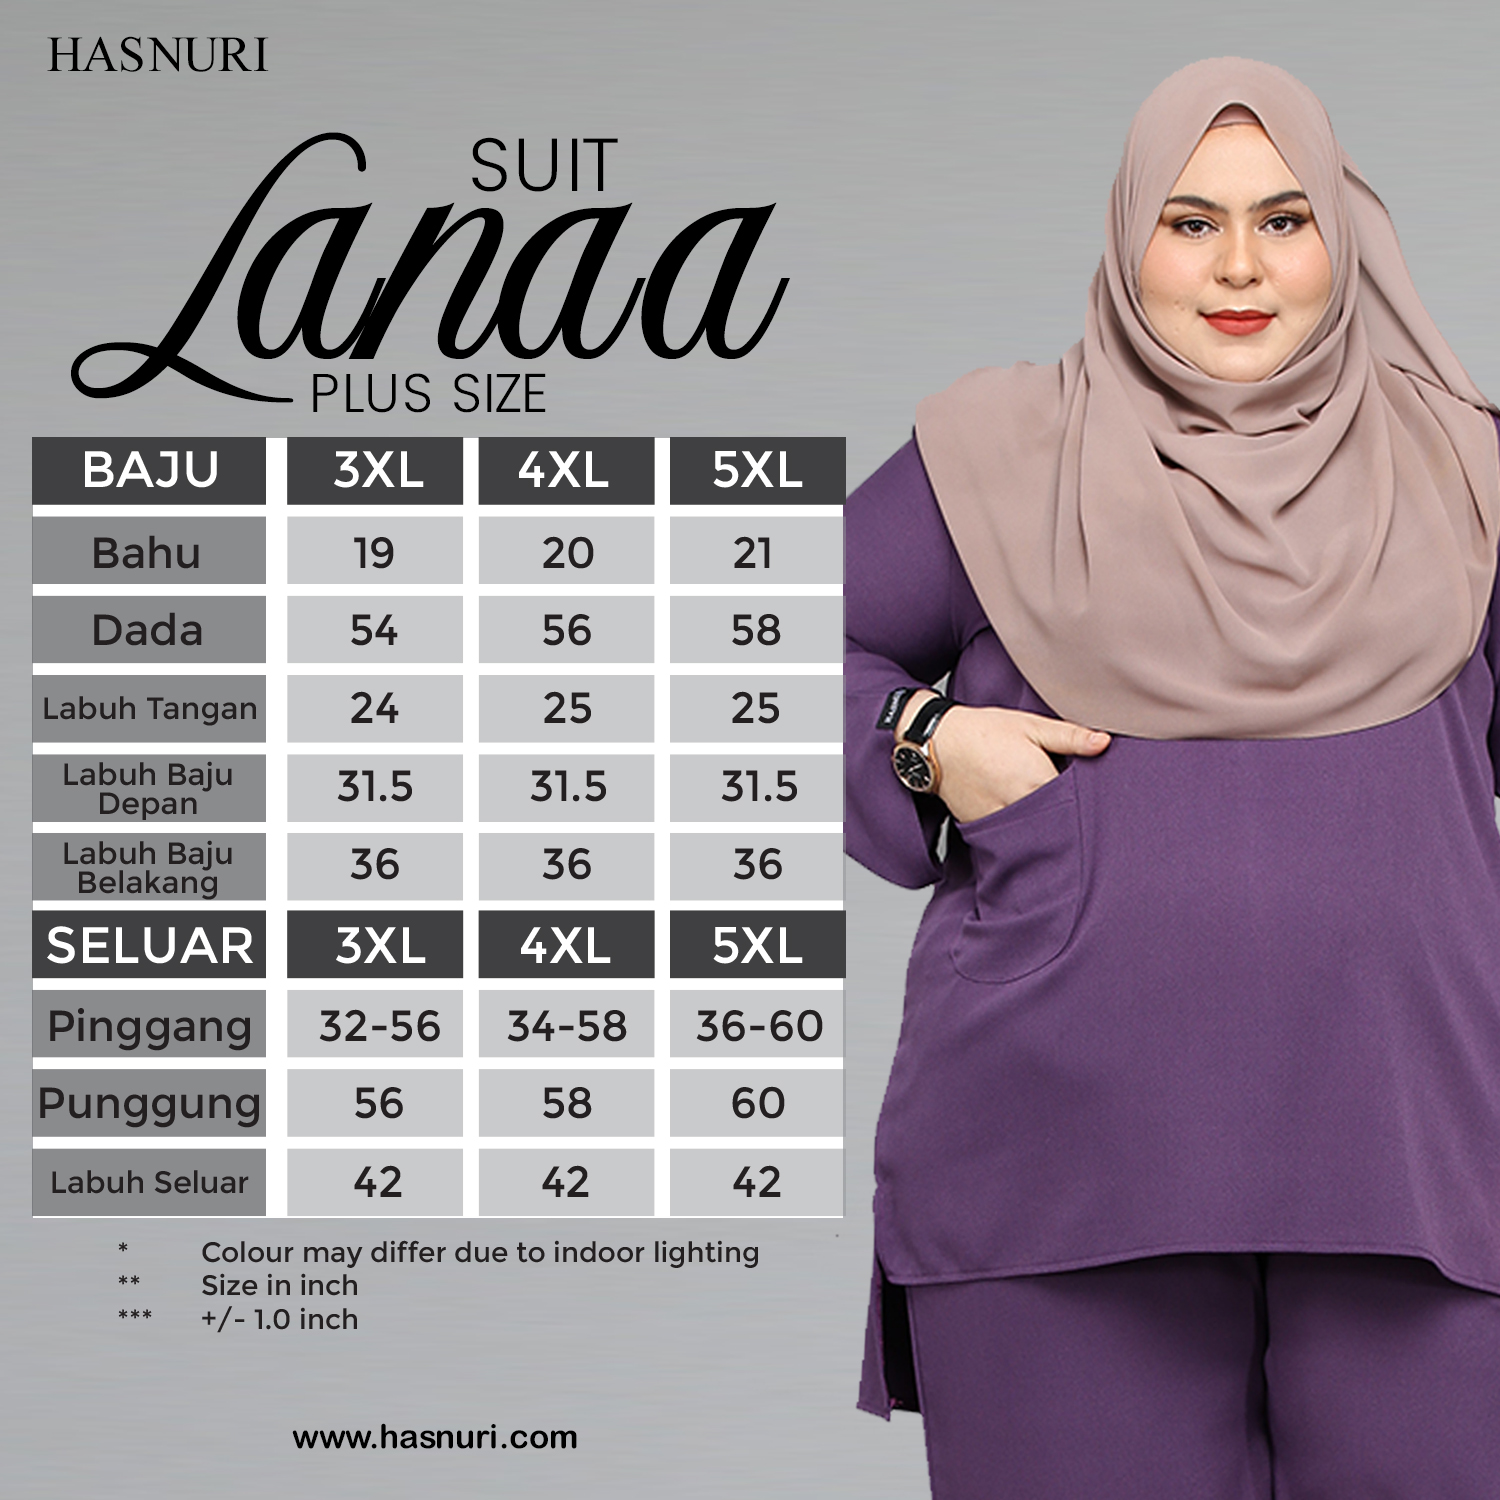 Suit Lanaa Plus Size - Rosewood